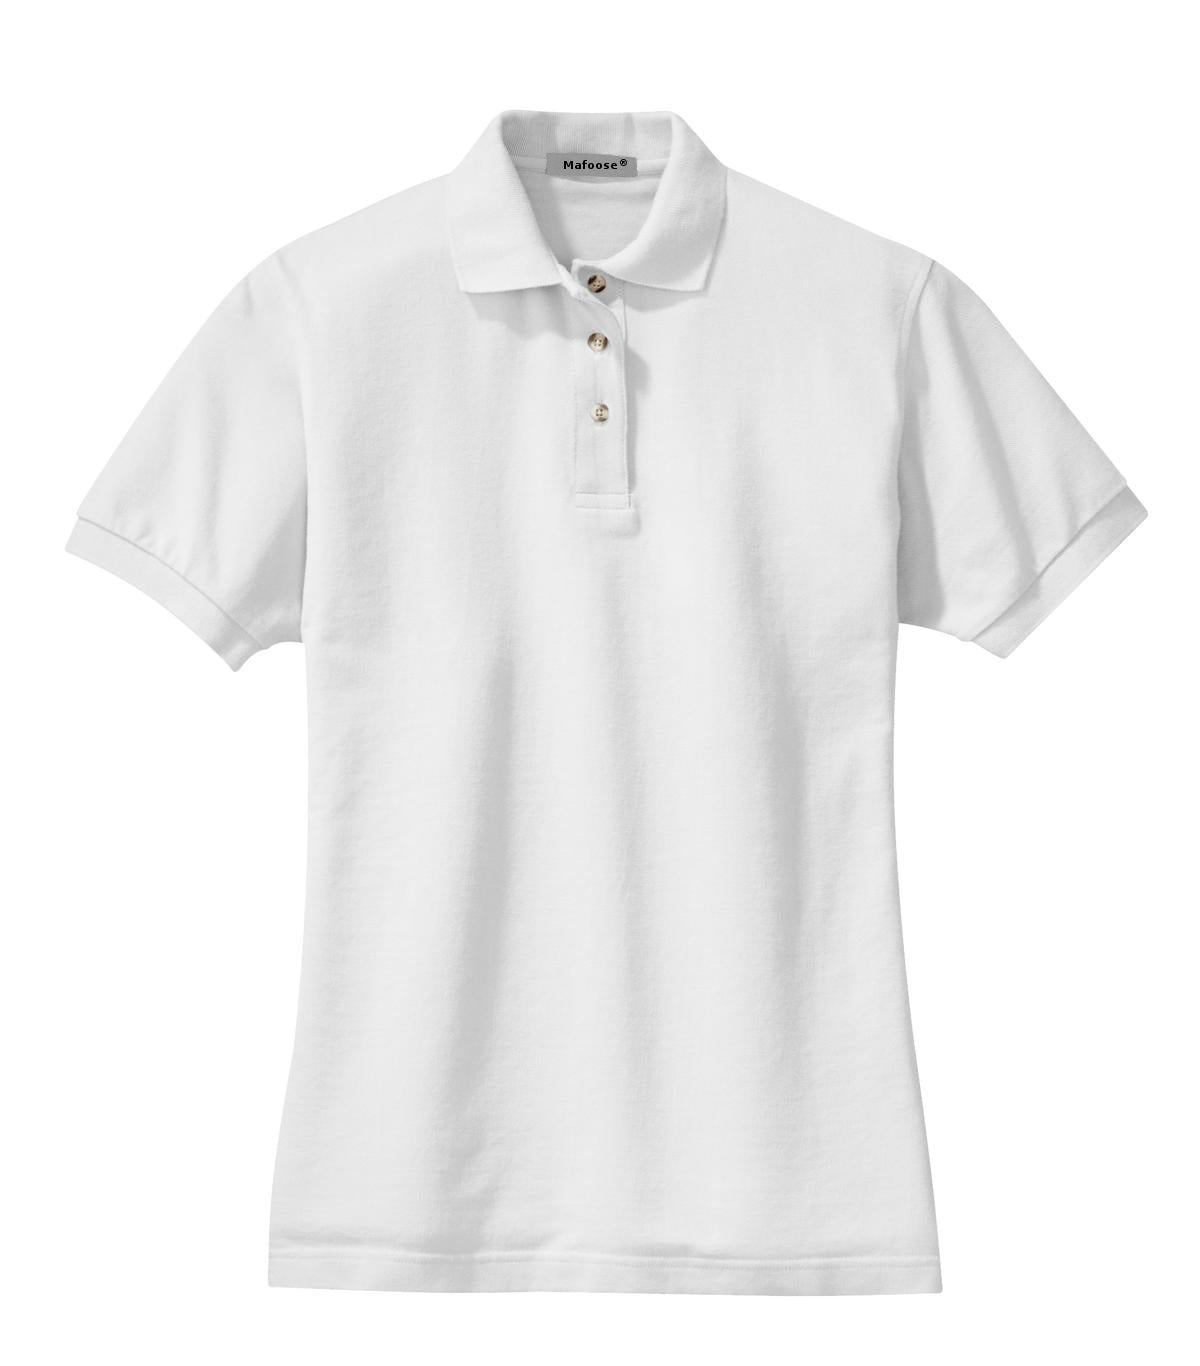 Mafoose Women's Heavyweight Cotton Pique Polo Shirt White-Front